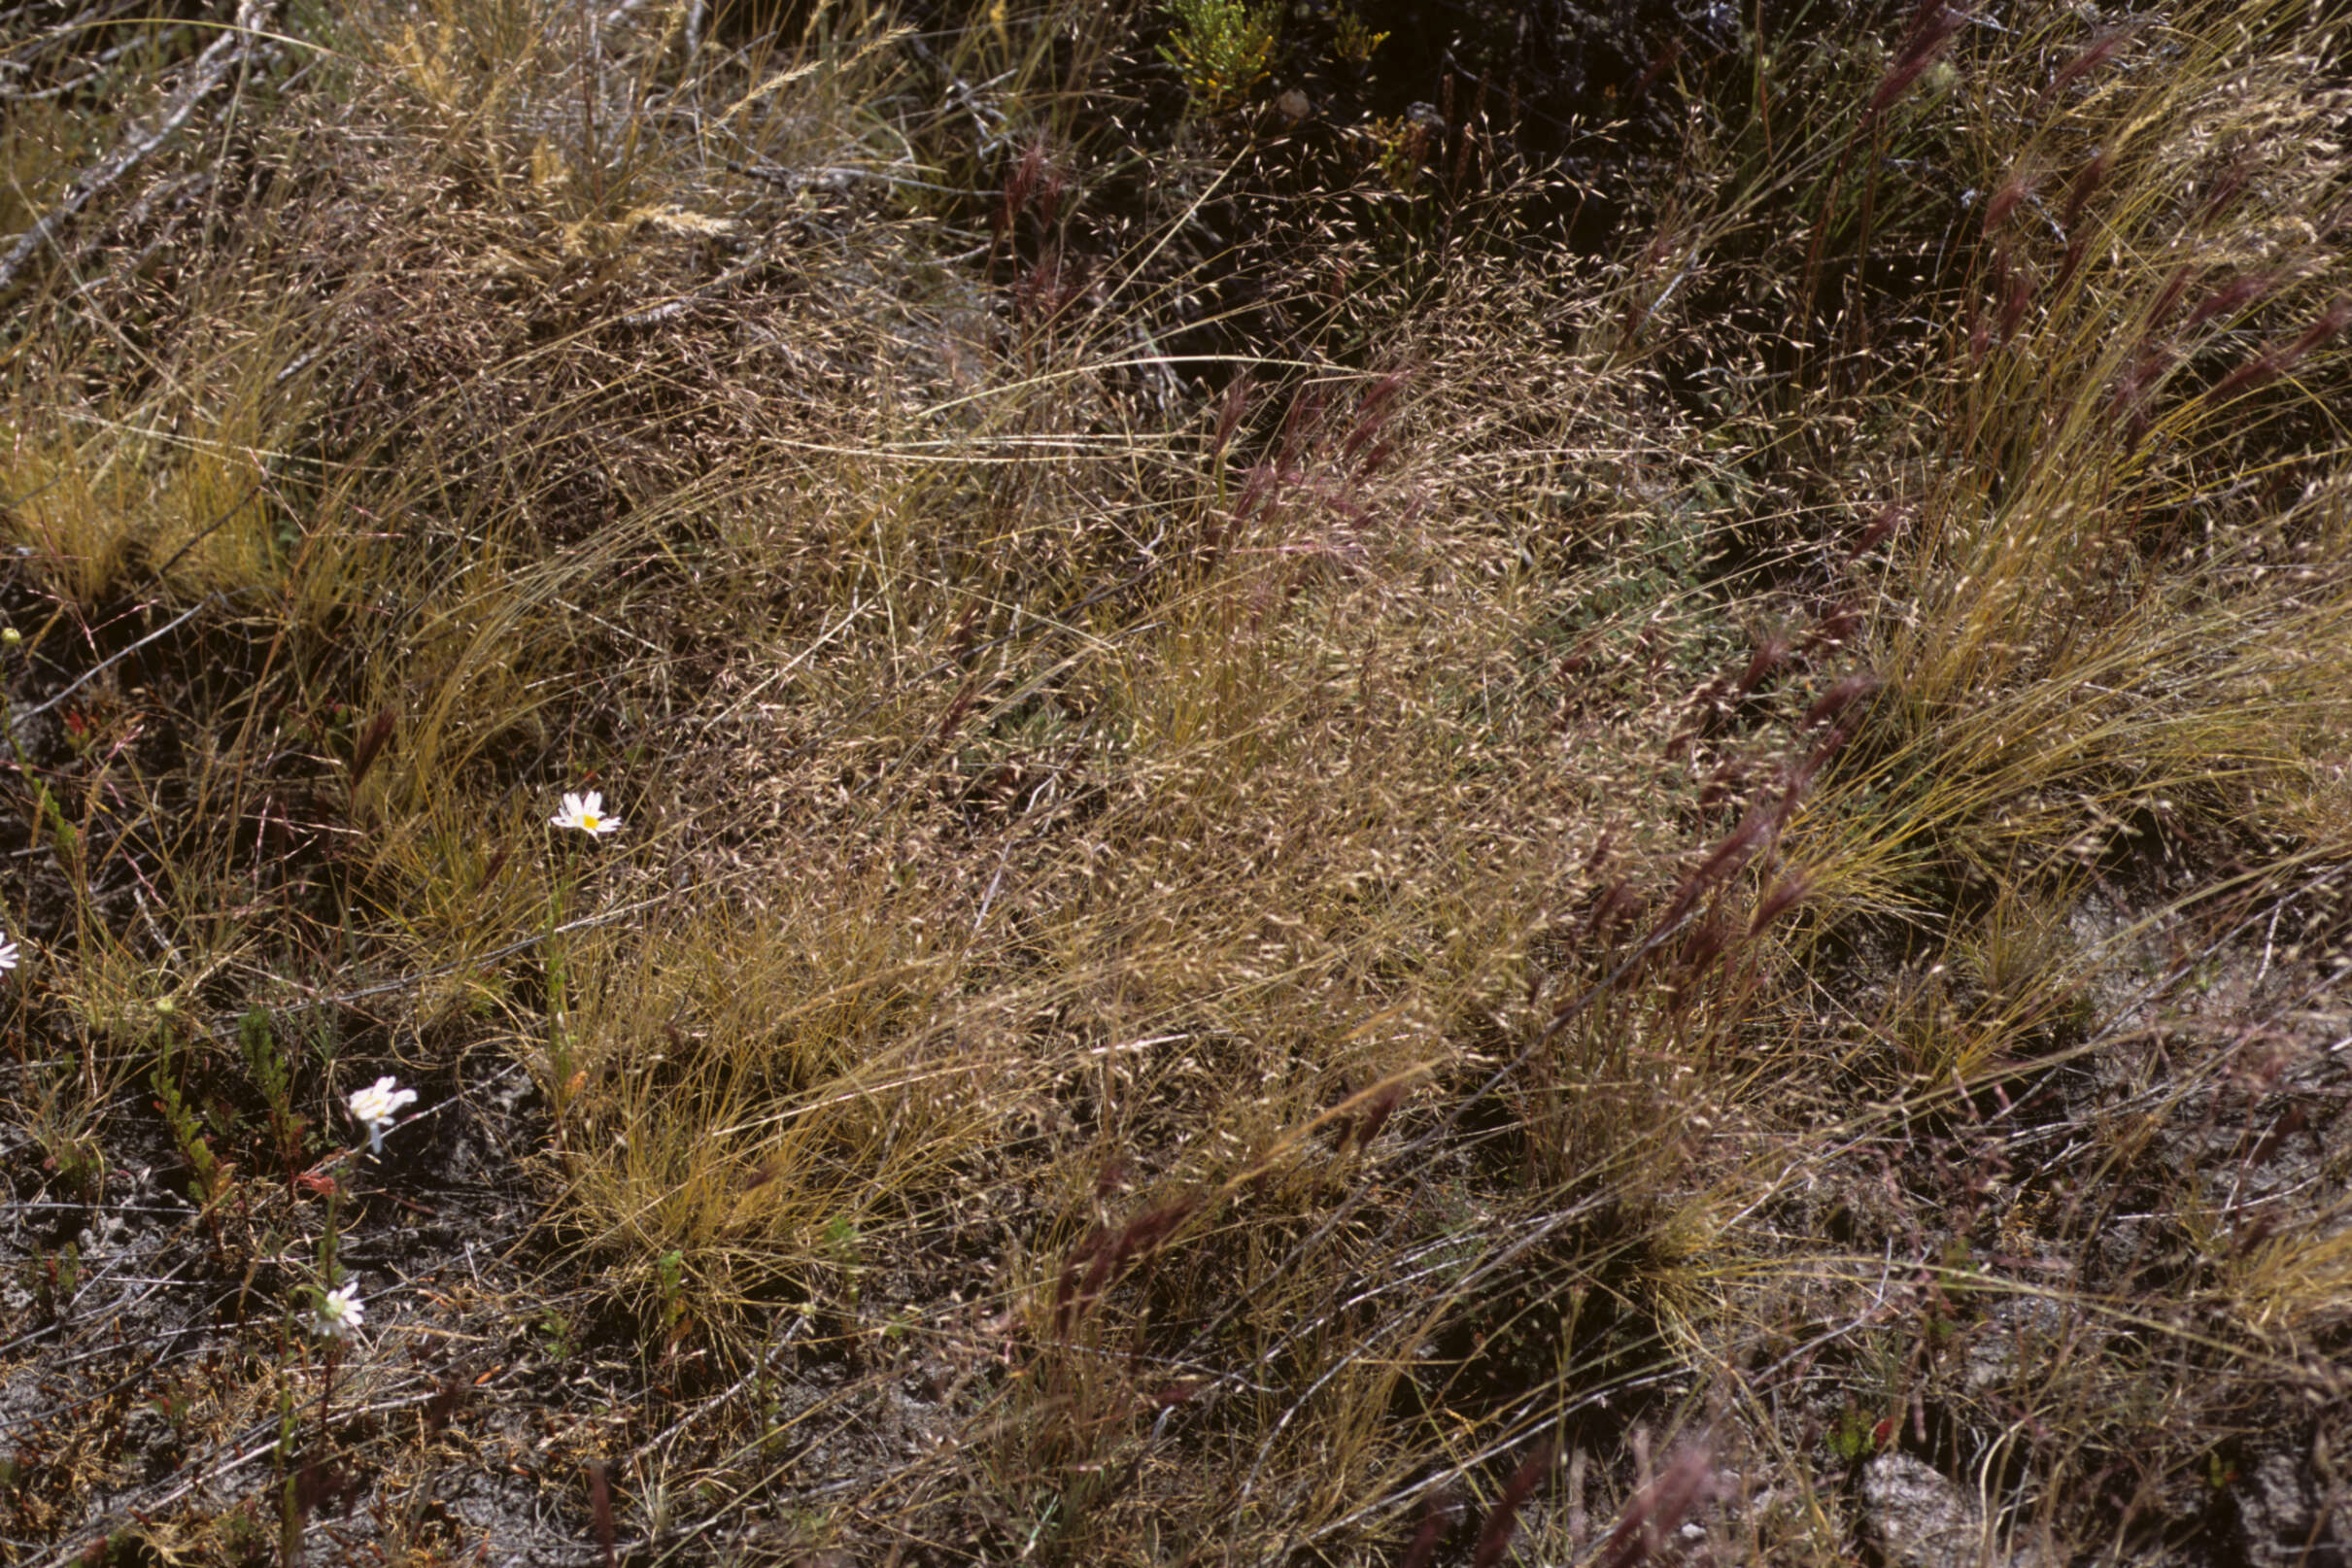 Image of Antarctic hair grass